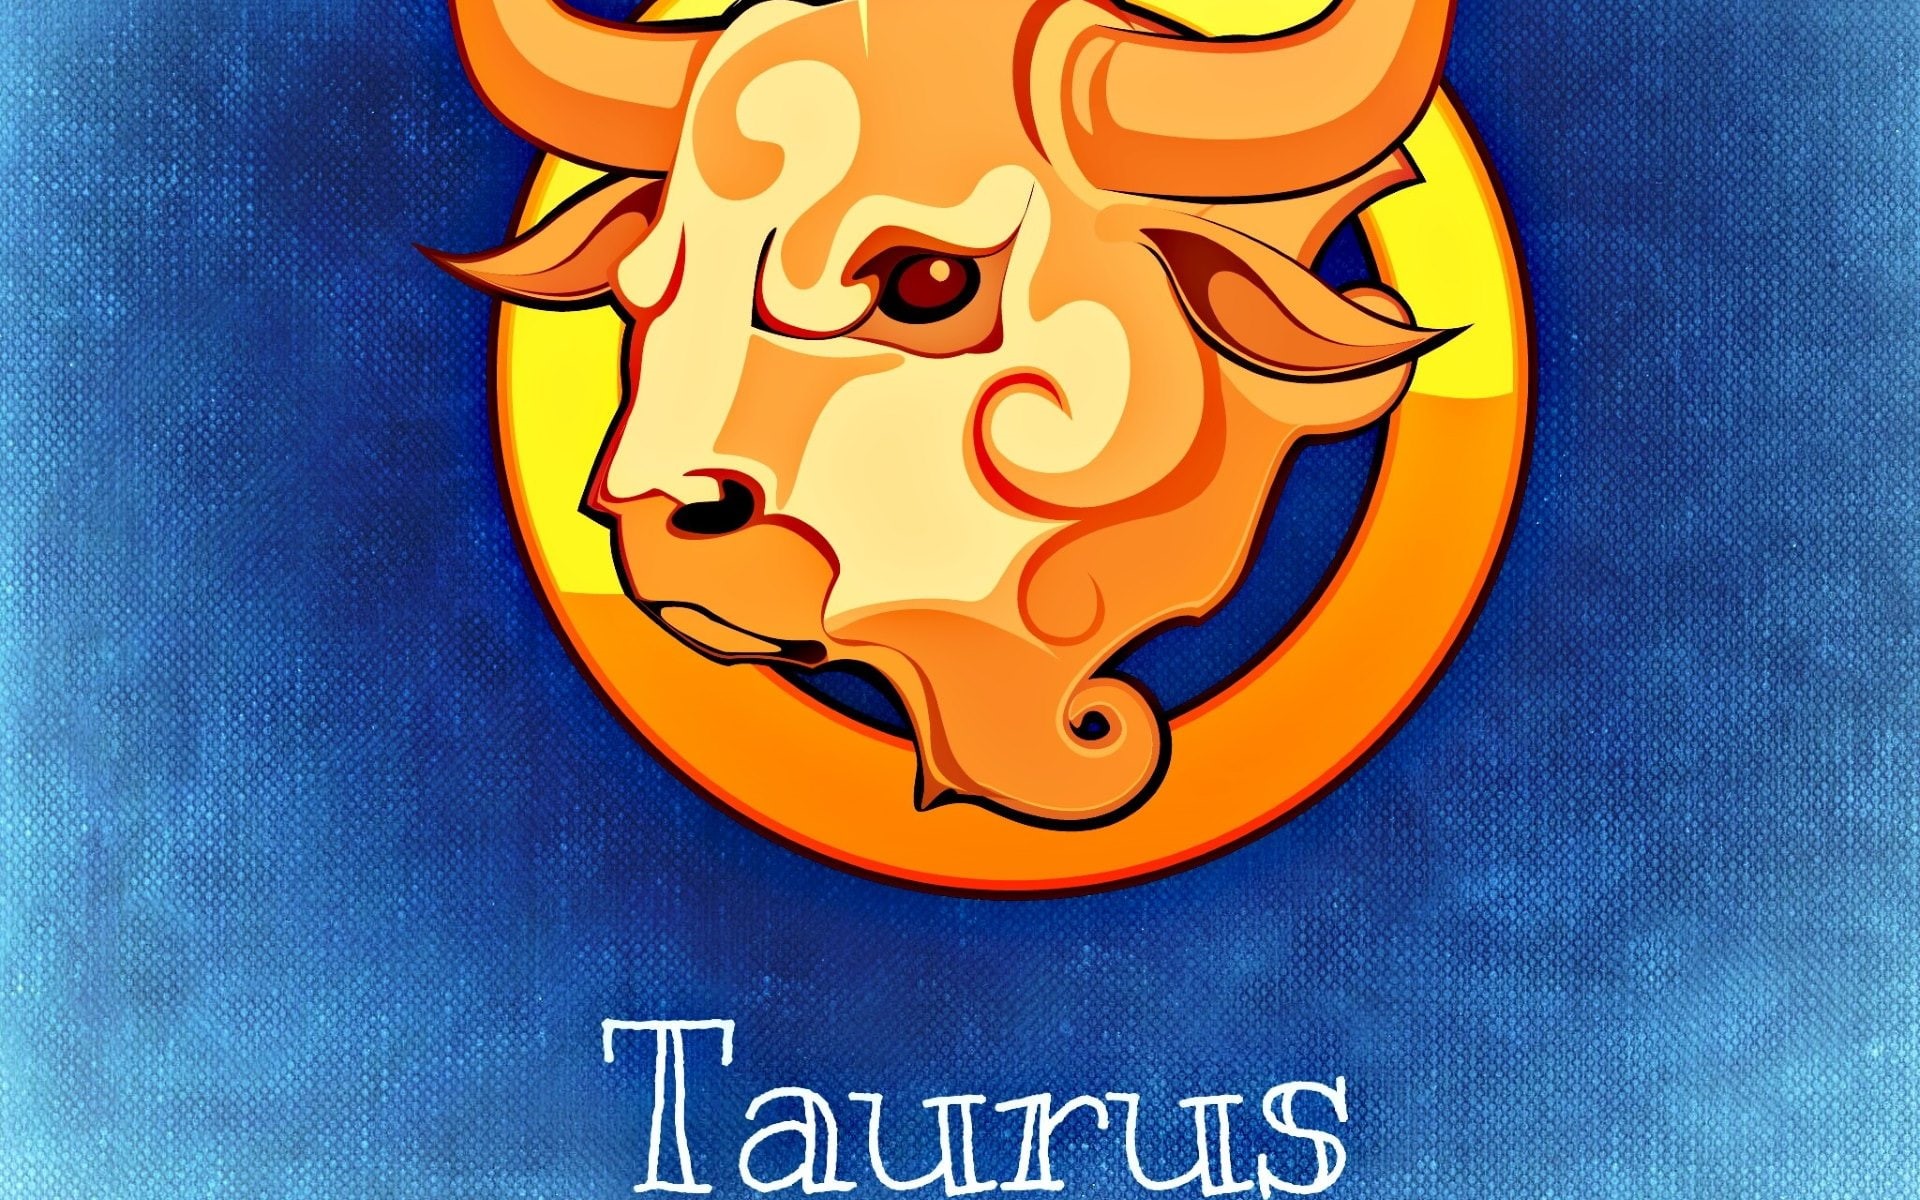 Wallpaper / Taurus (Astrology), Artistic, Horoscope, Zodiac, Astrology, 1080P free download